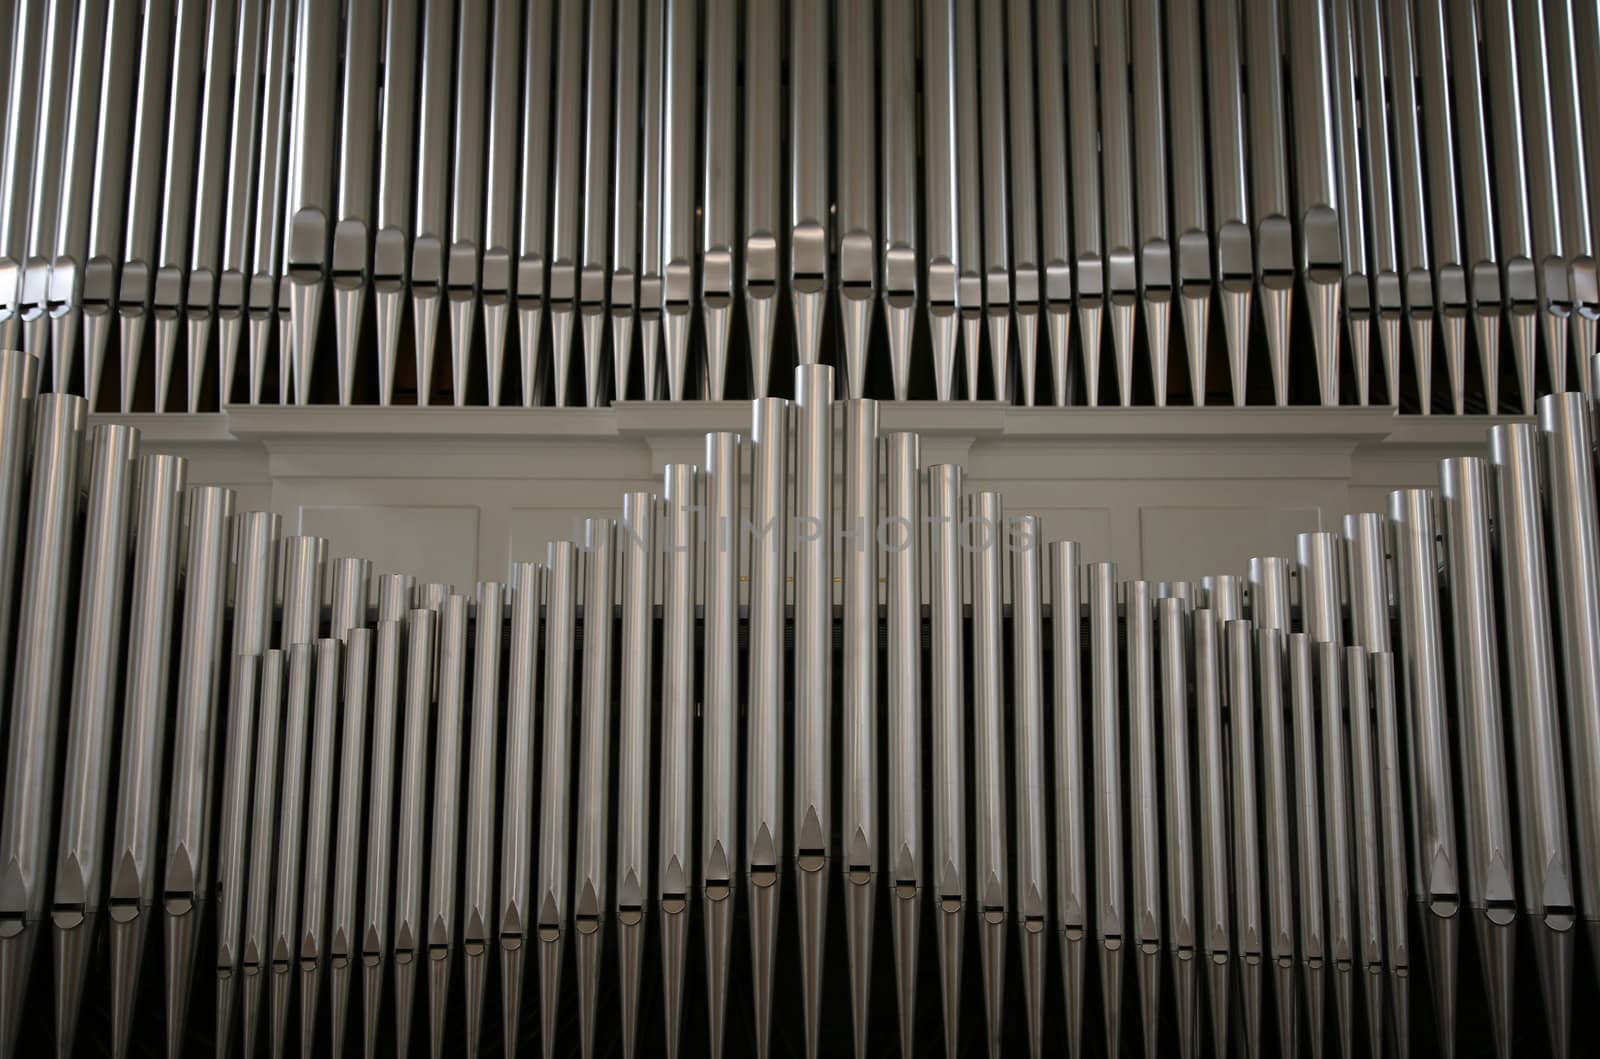 Organ by ABCDK